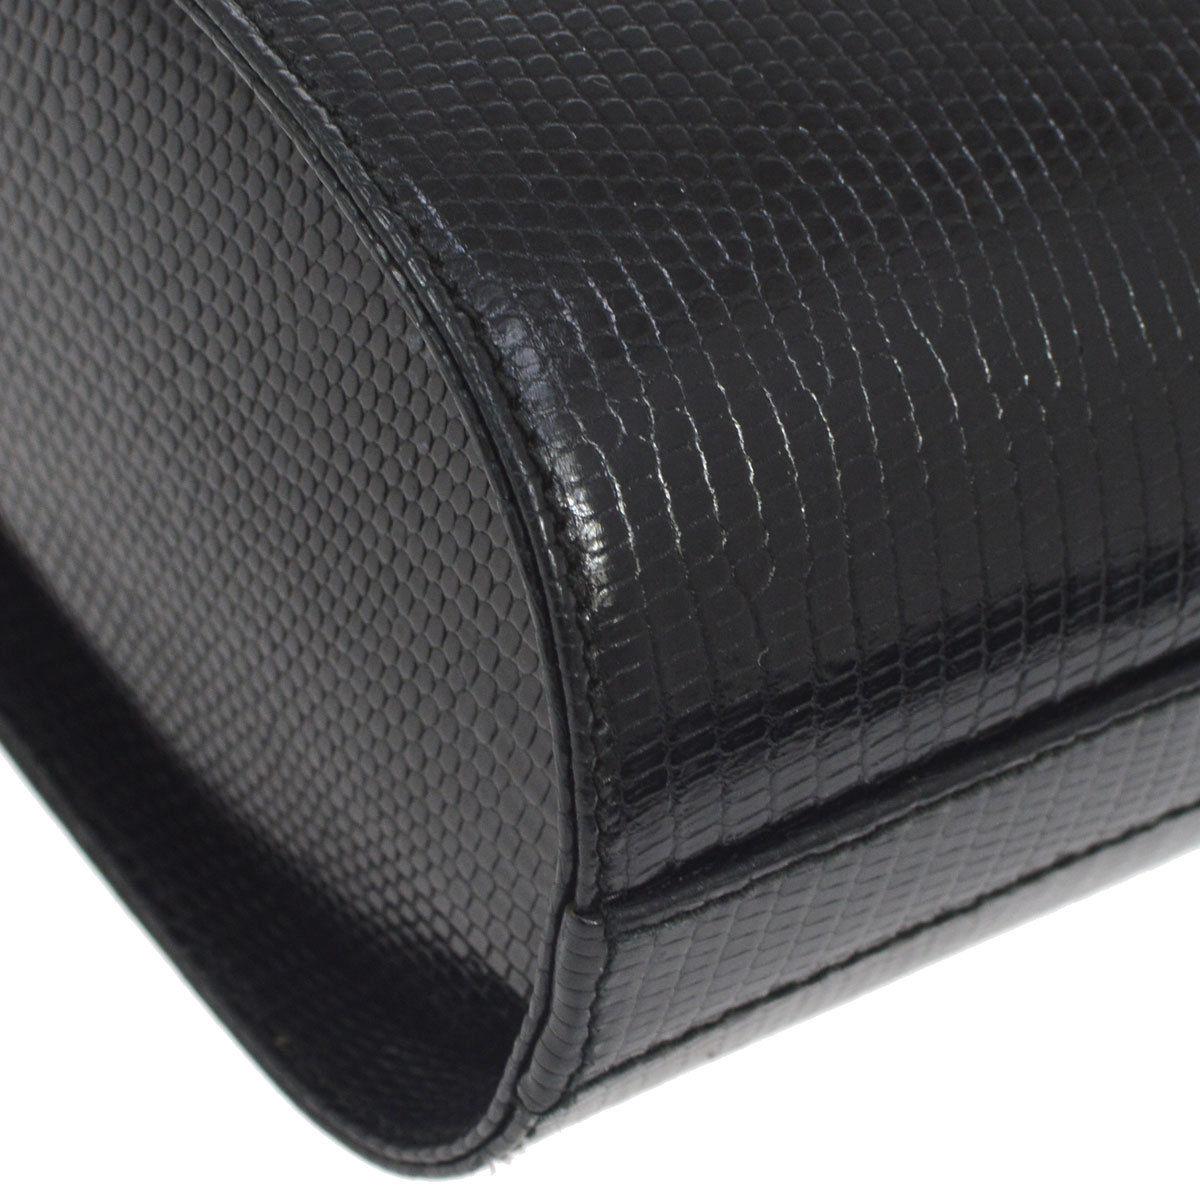 Gucci Black Lizard Leather Top Handle Satchel Vanity Style Mini Small Bag 1